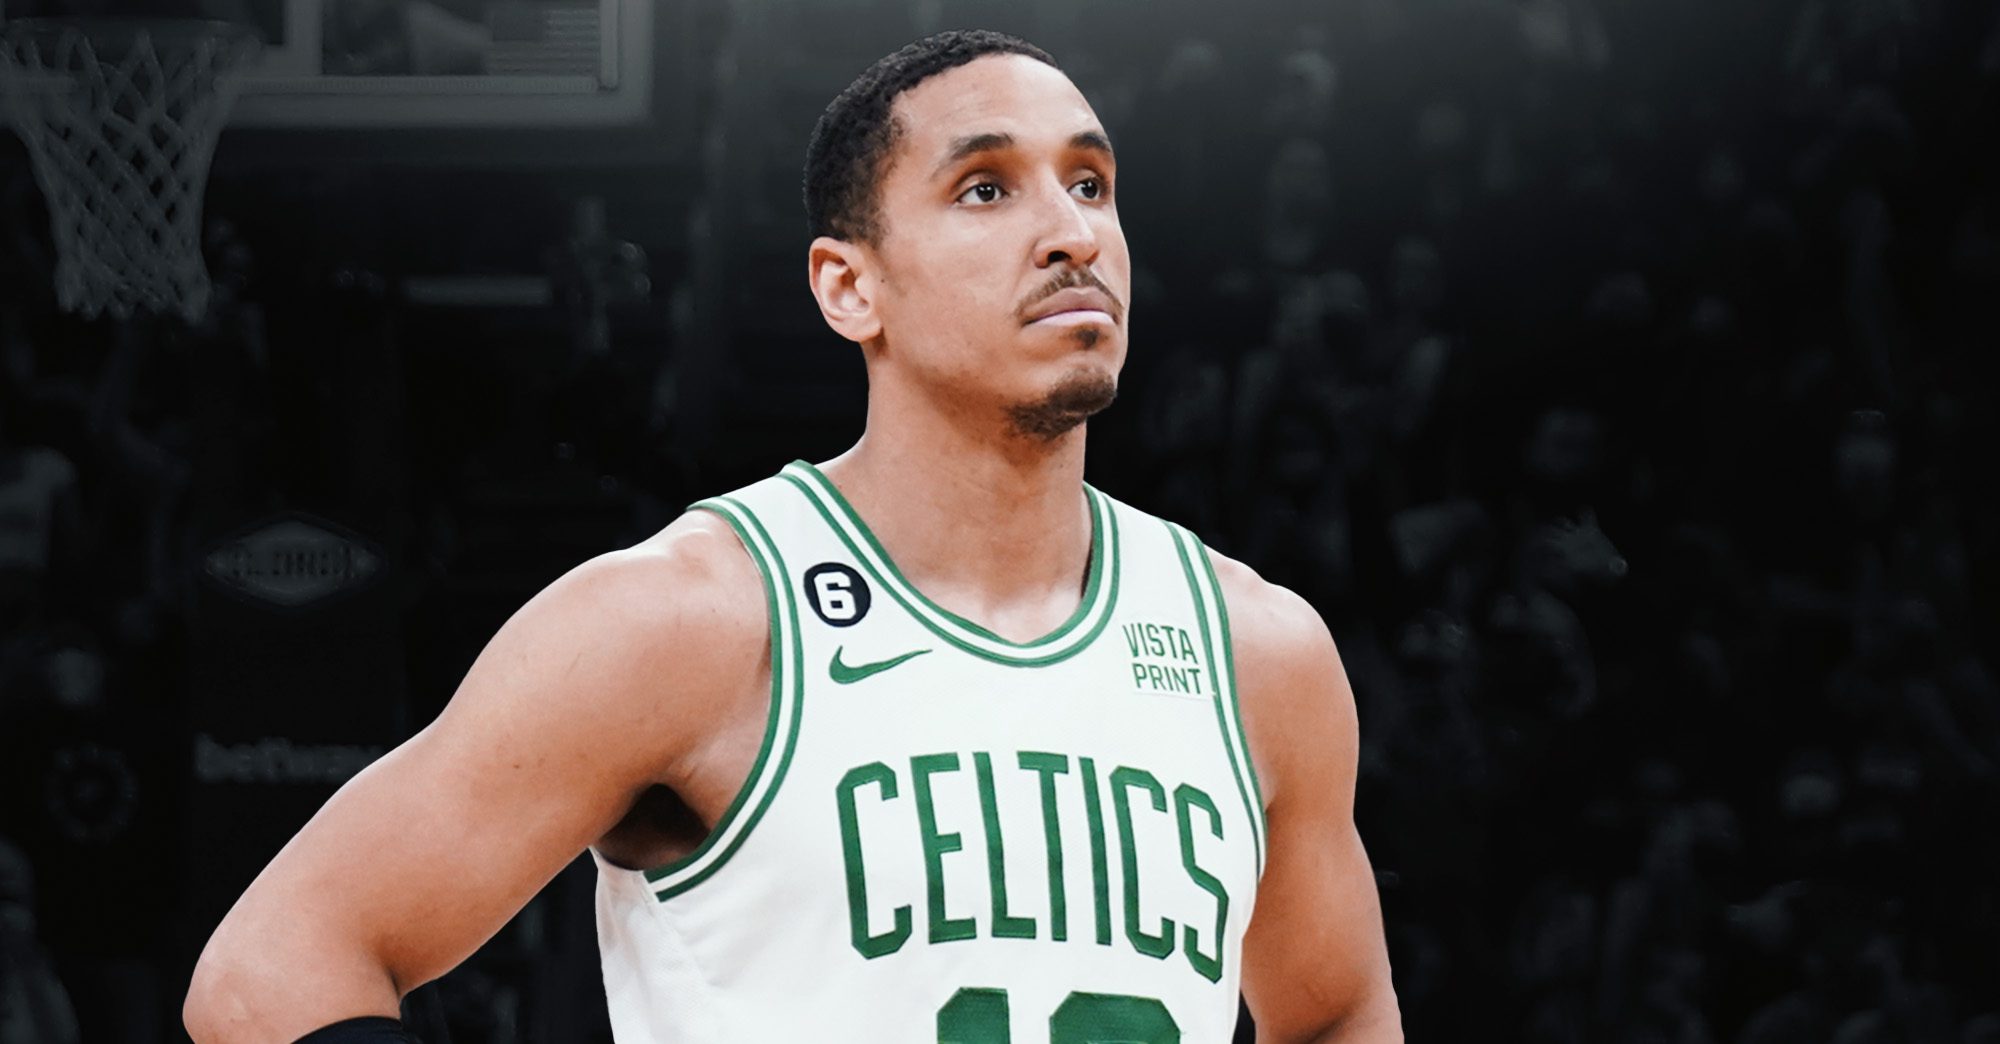 Malcolm Brogdon ‘Pissed’ at Celtics: Report